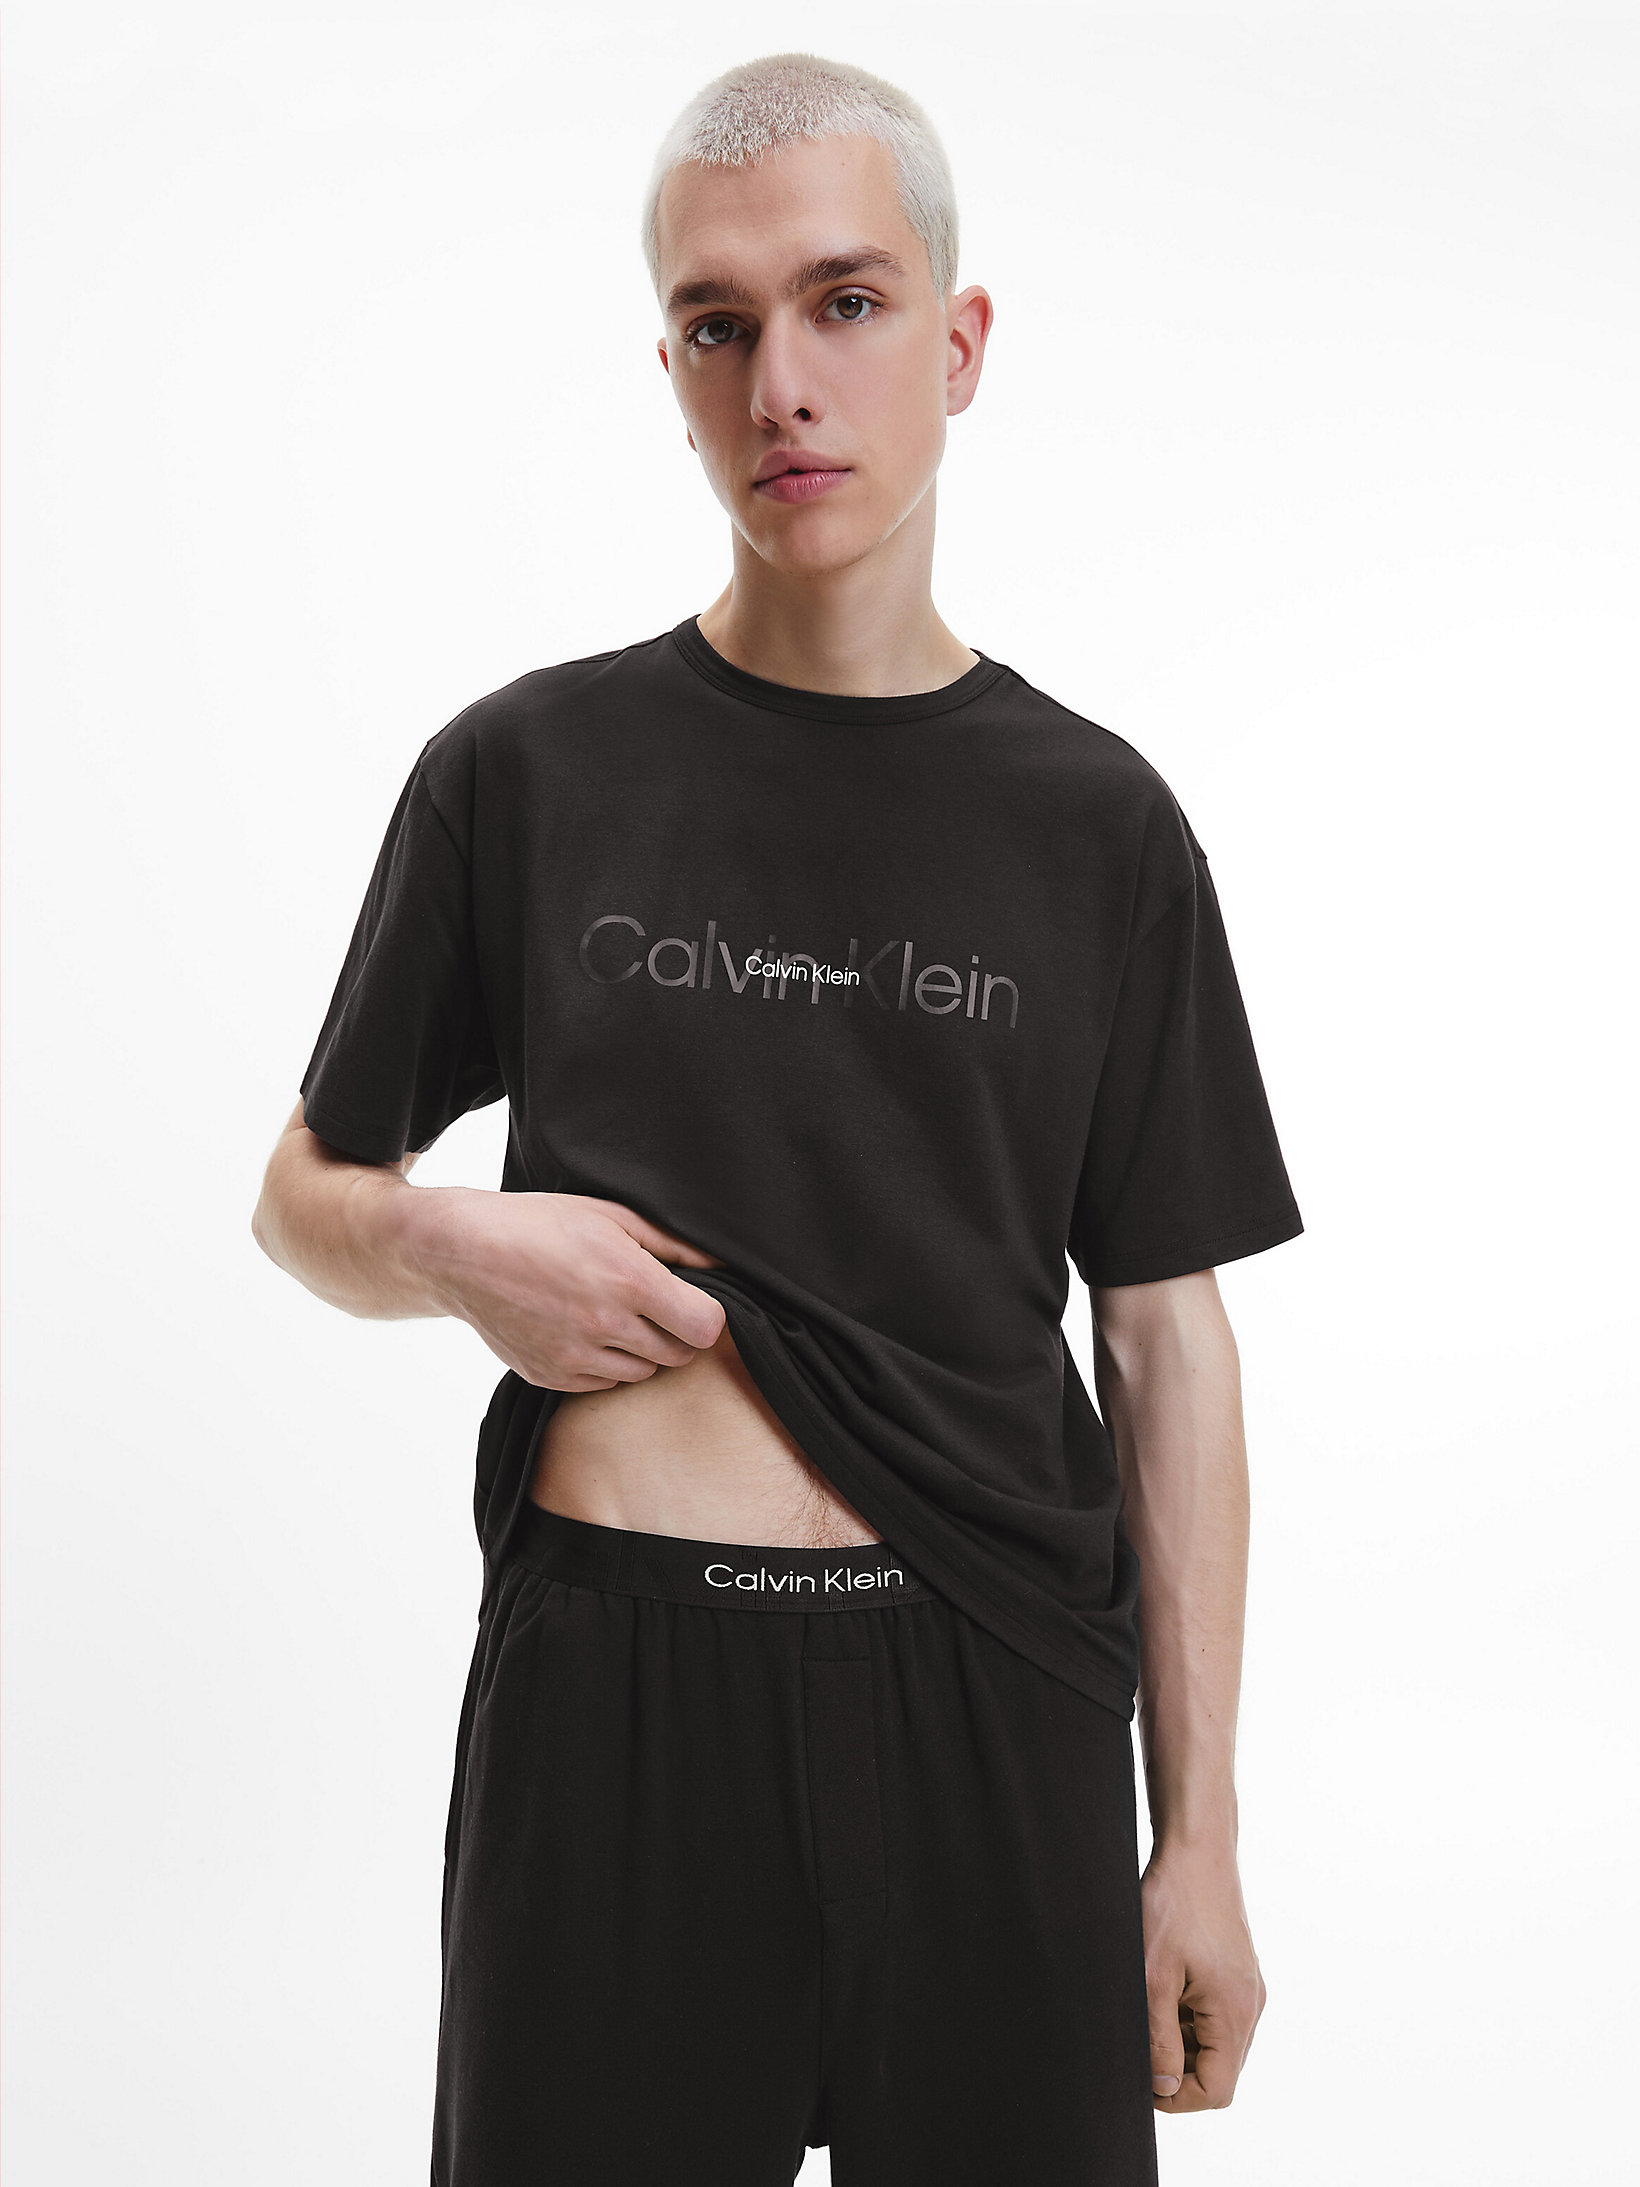 Calvin Klein T-shirt herren 000NM2355E Black Schwarz Rundhalsausschnitt shirt 